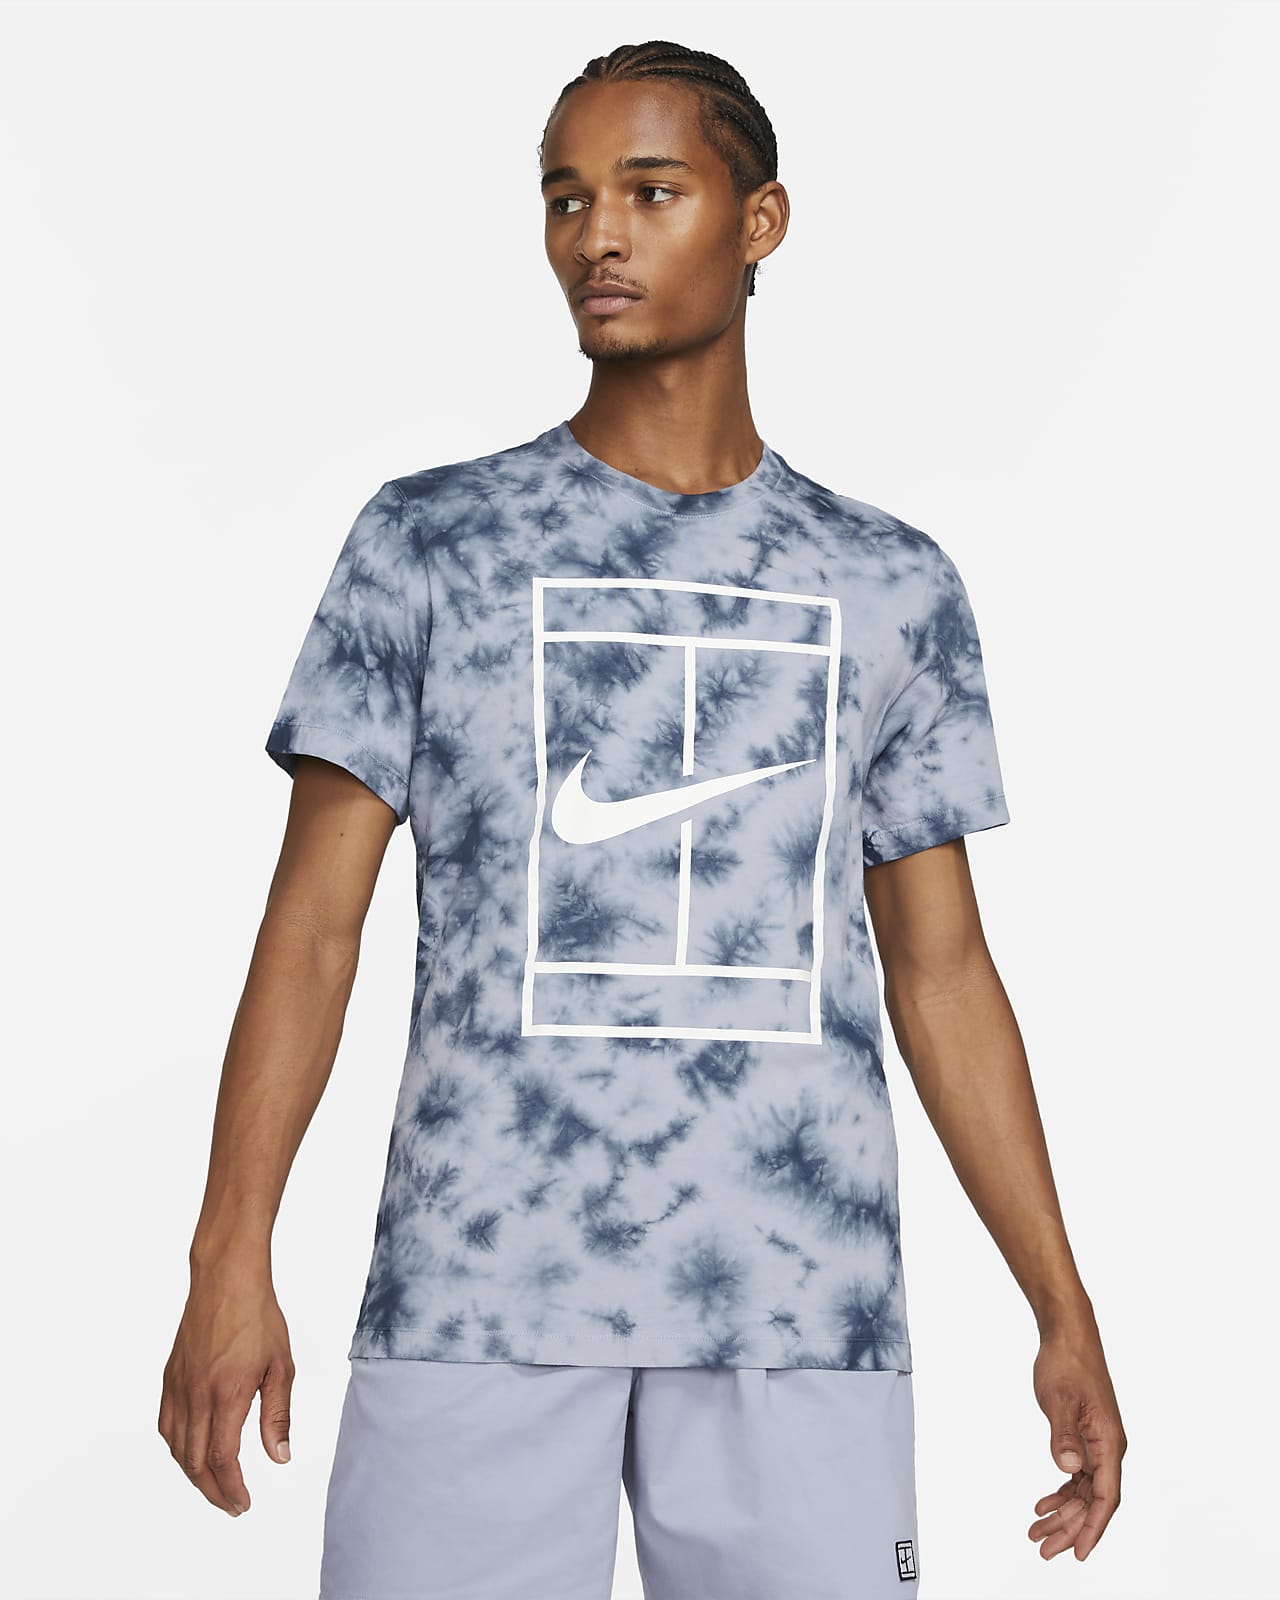 NikeCourt Men's Tie-Dye Tennis T-Shirt